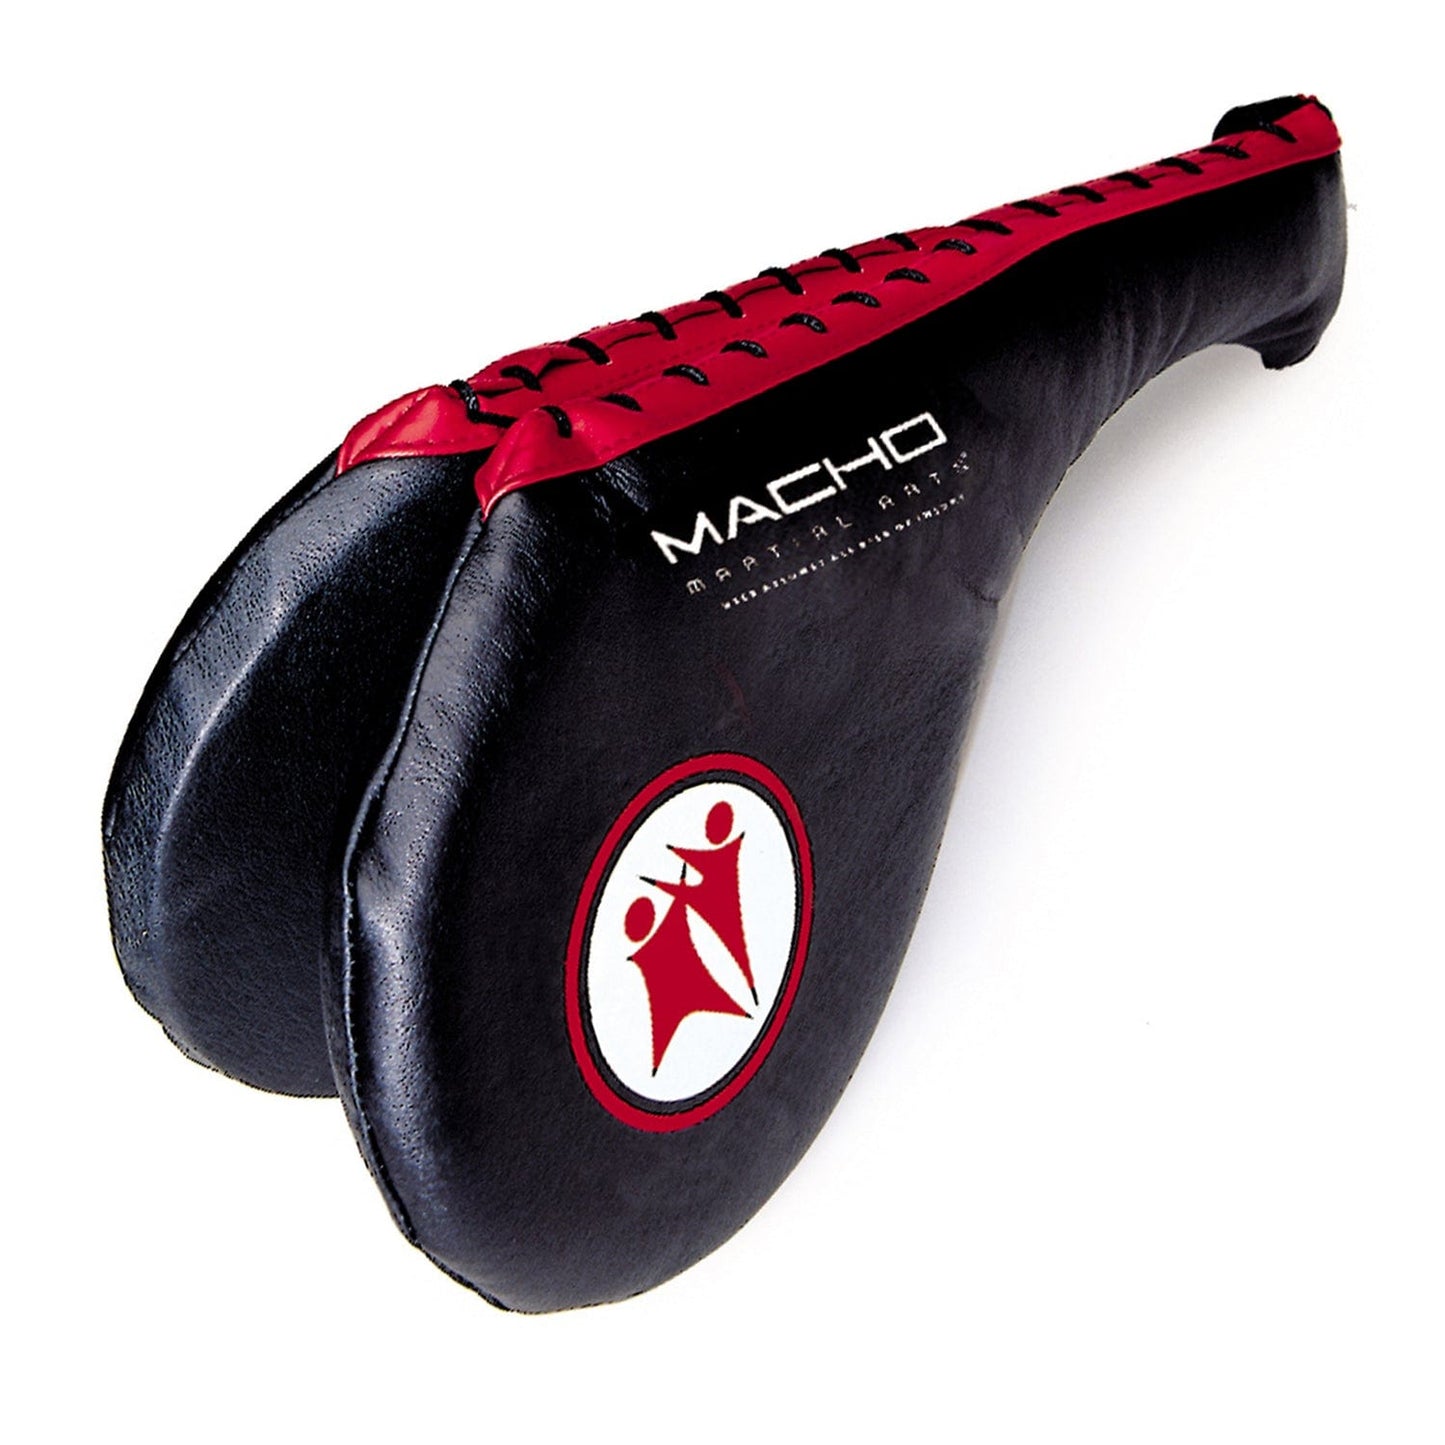 Macho sporting goods Macho Double Paddle Clapper Taekwondo target